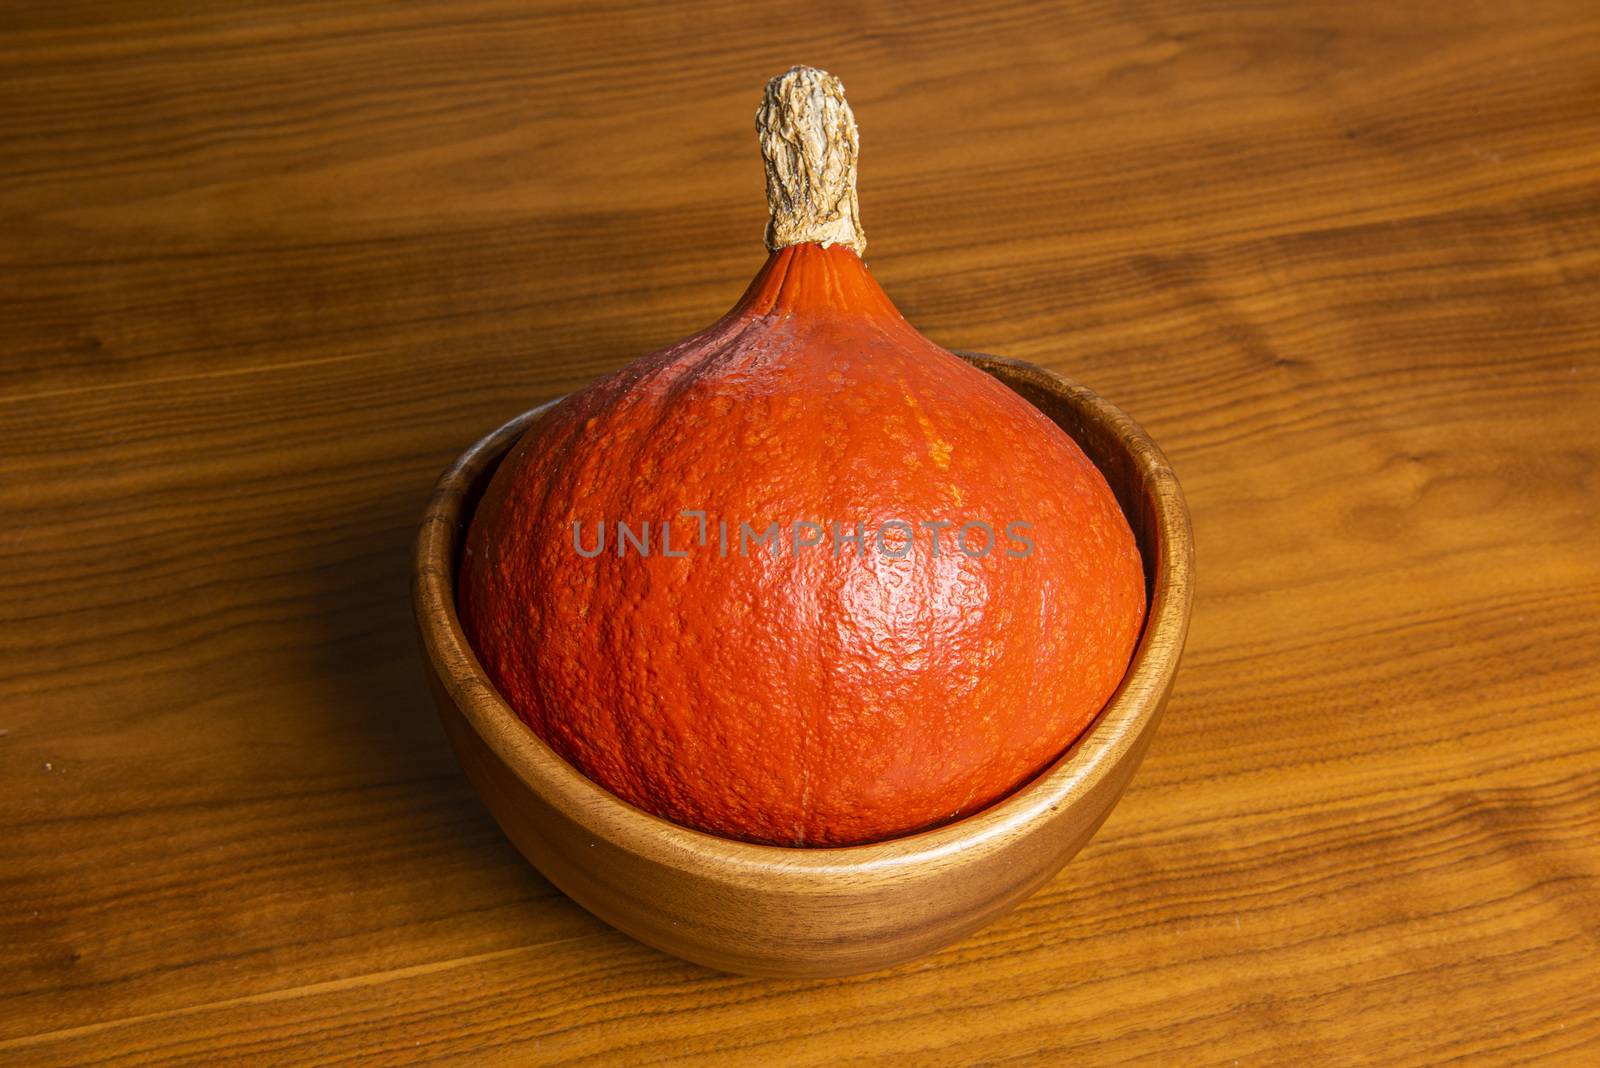 Orange pumpkin lying in a wooden bowl on a table